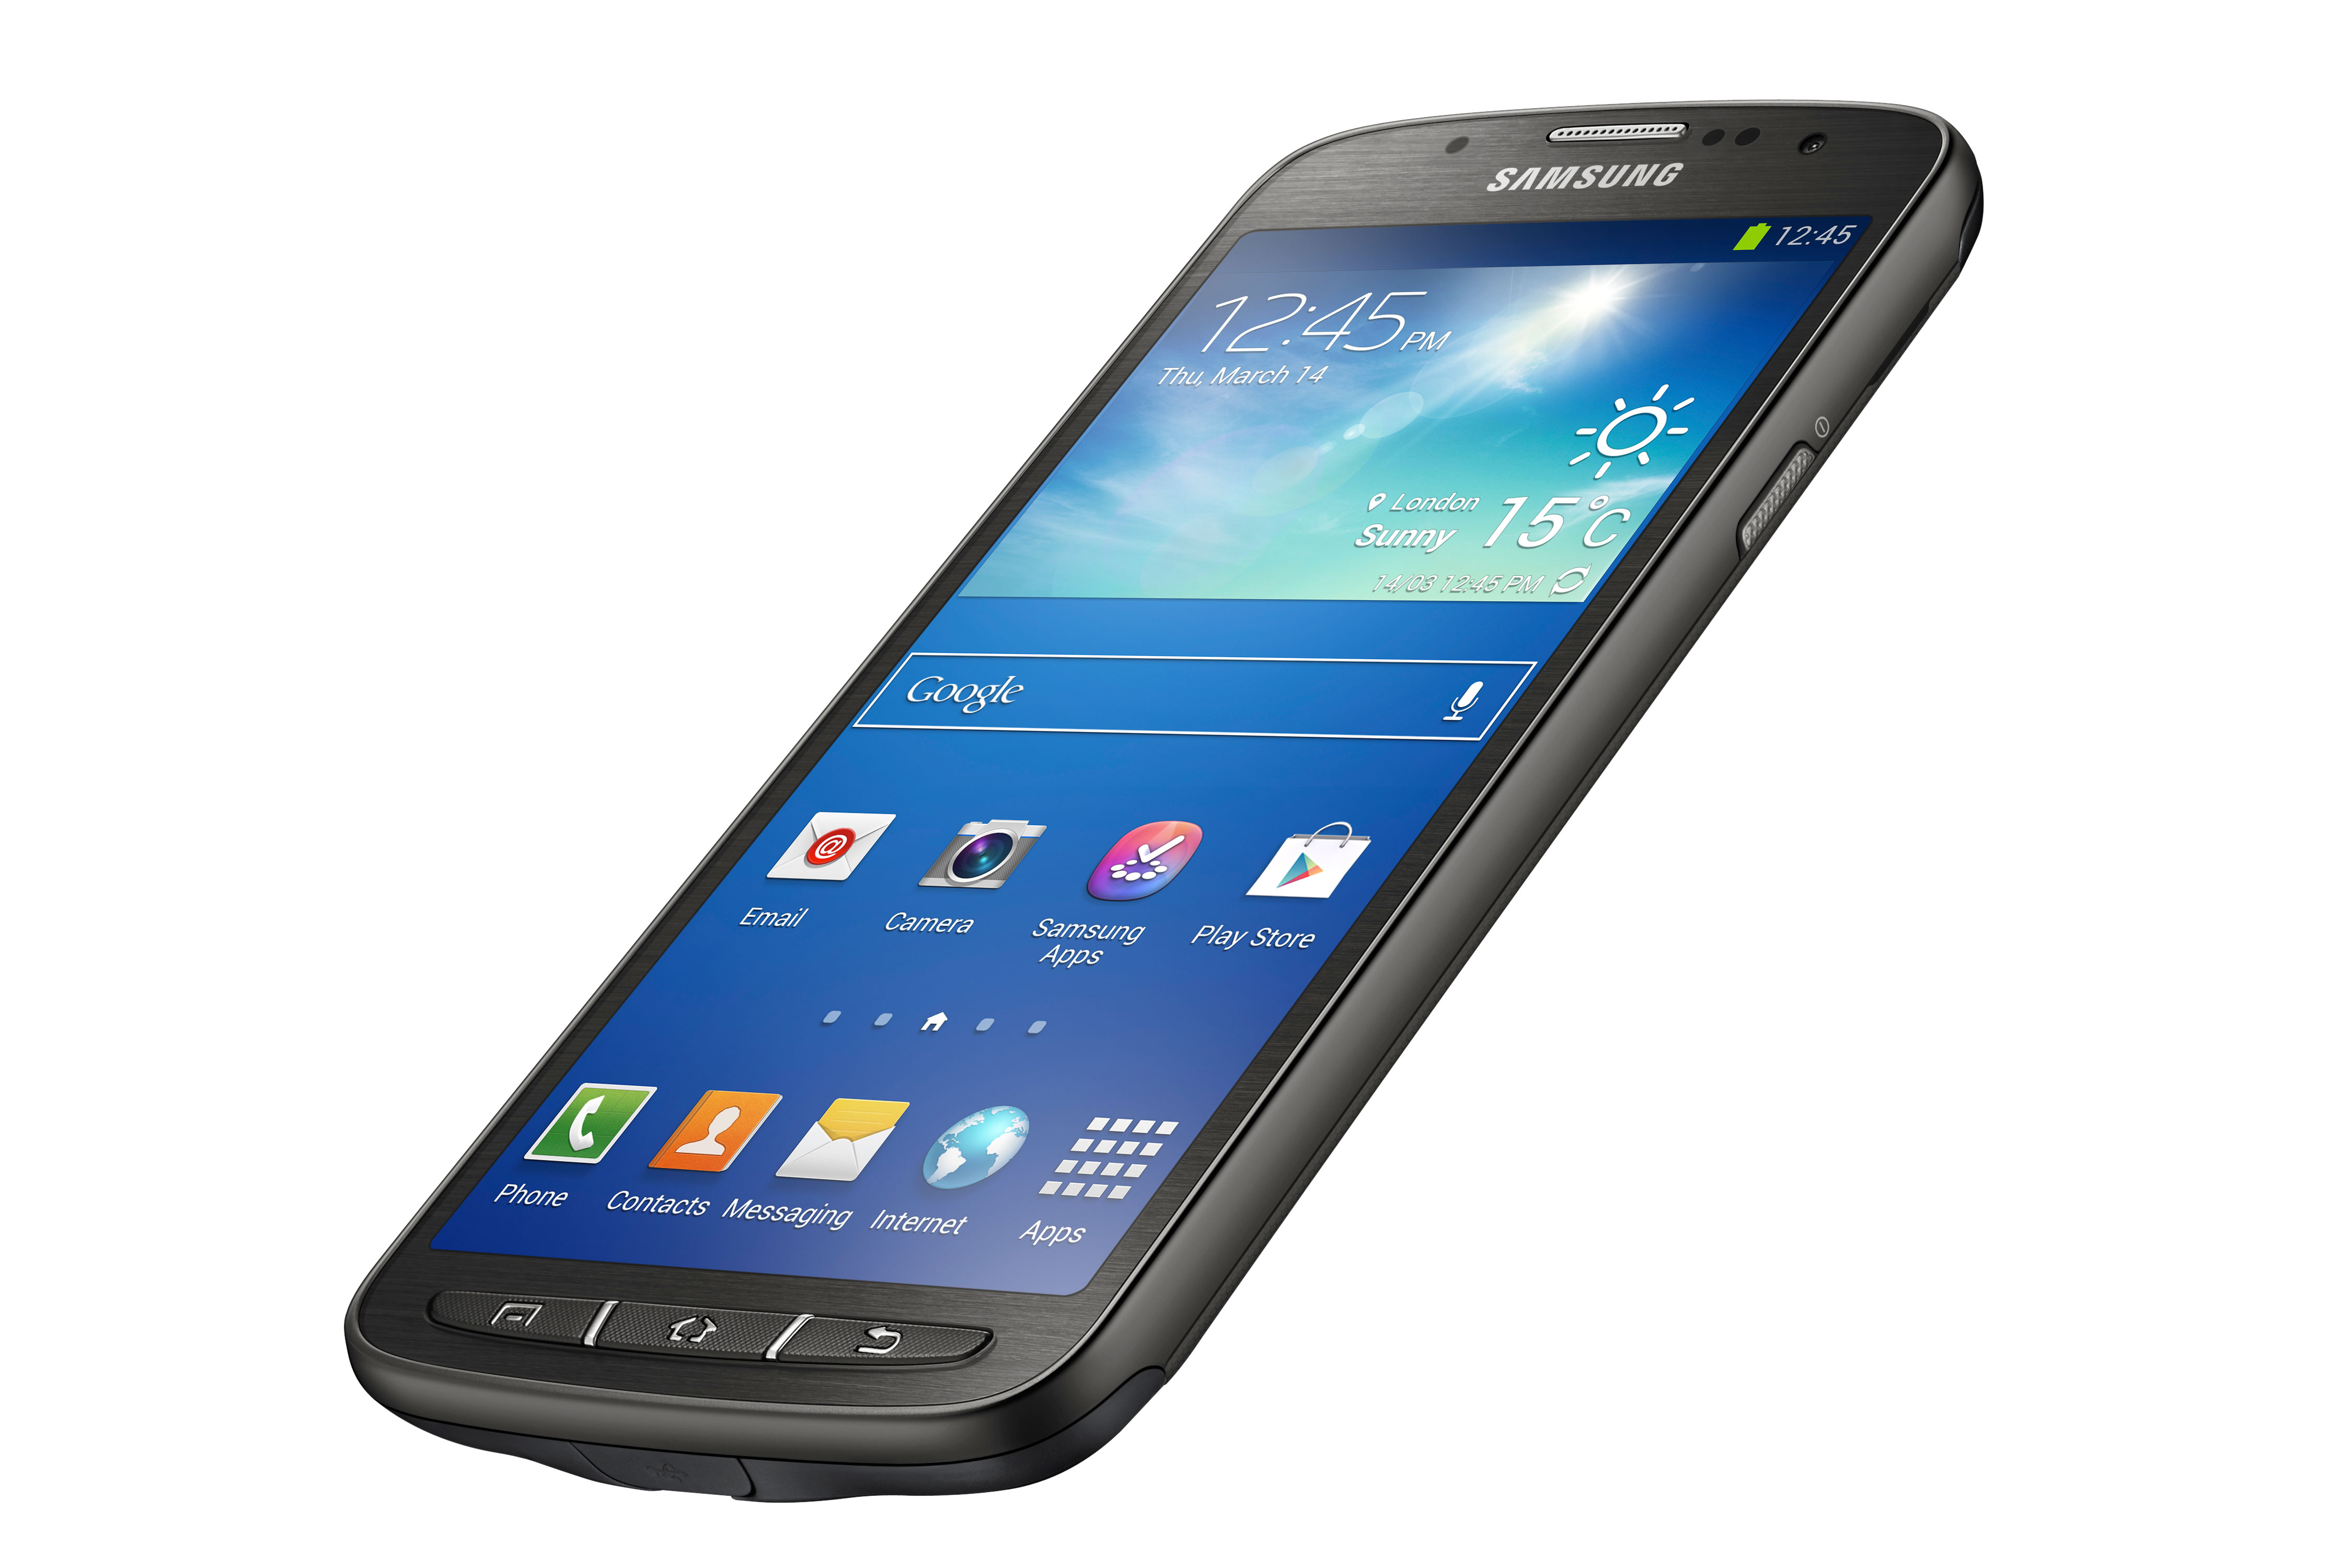 самсунг галакси s4 цена Samsung GALAXY S4 дата выхода, цена и характеристики